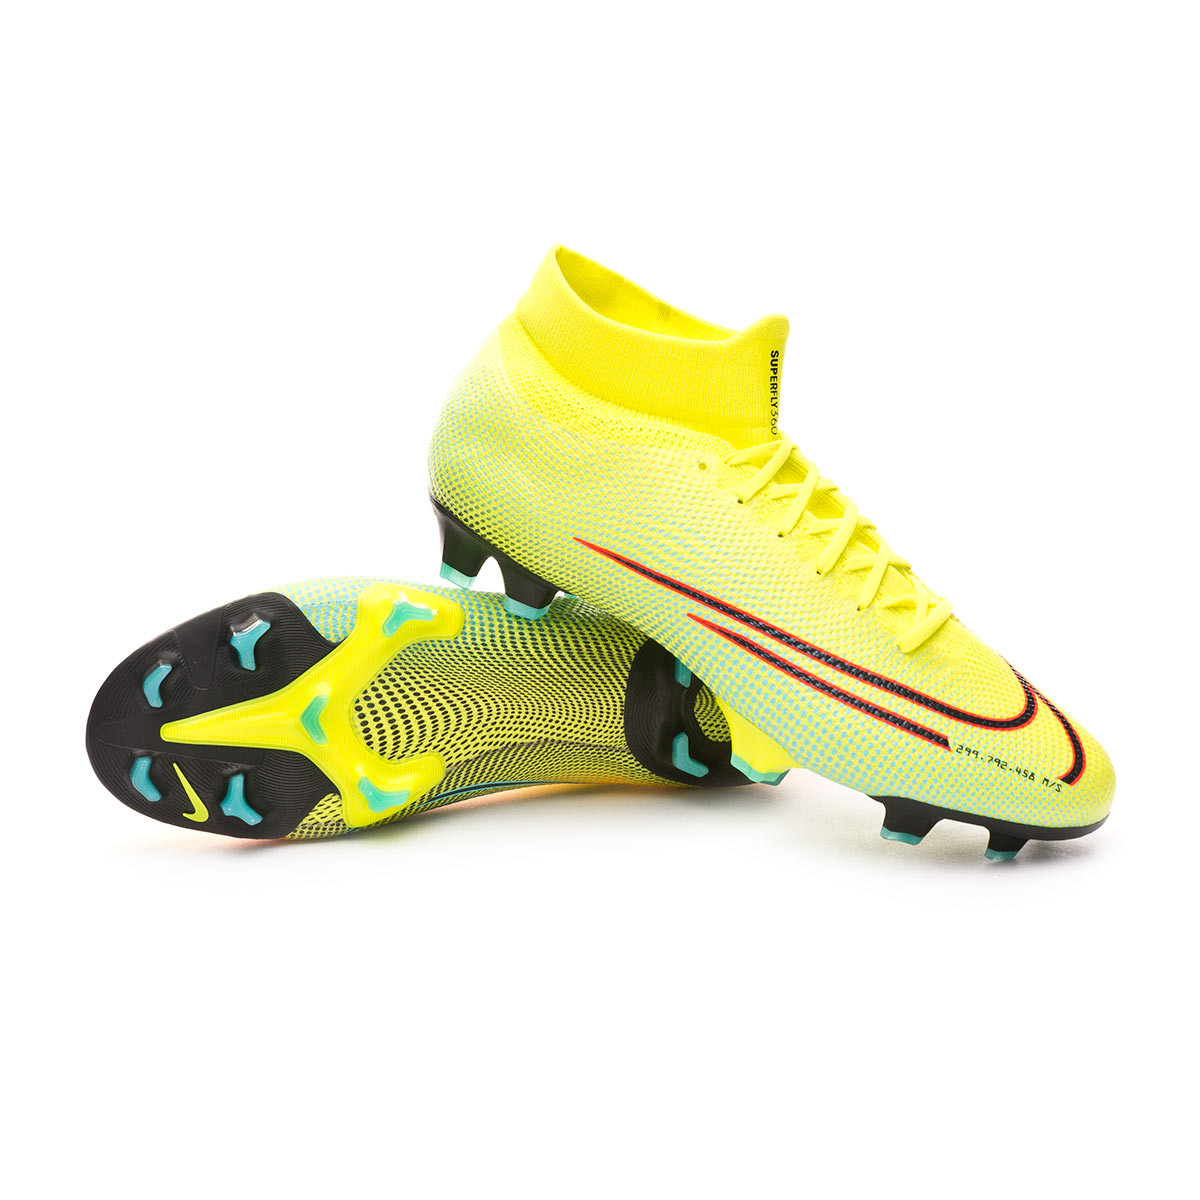 adidas soccer boots rebel